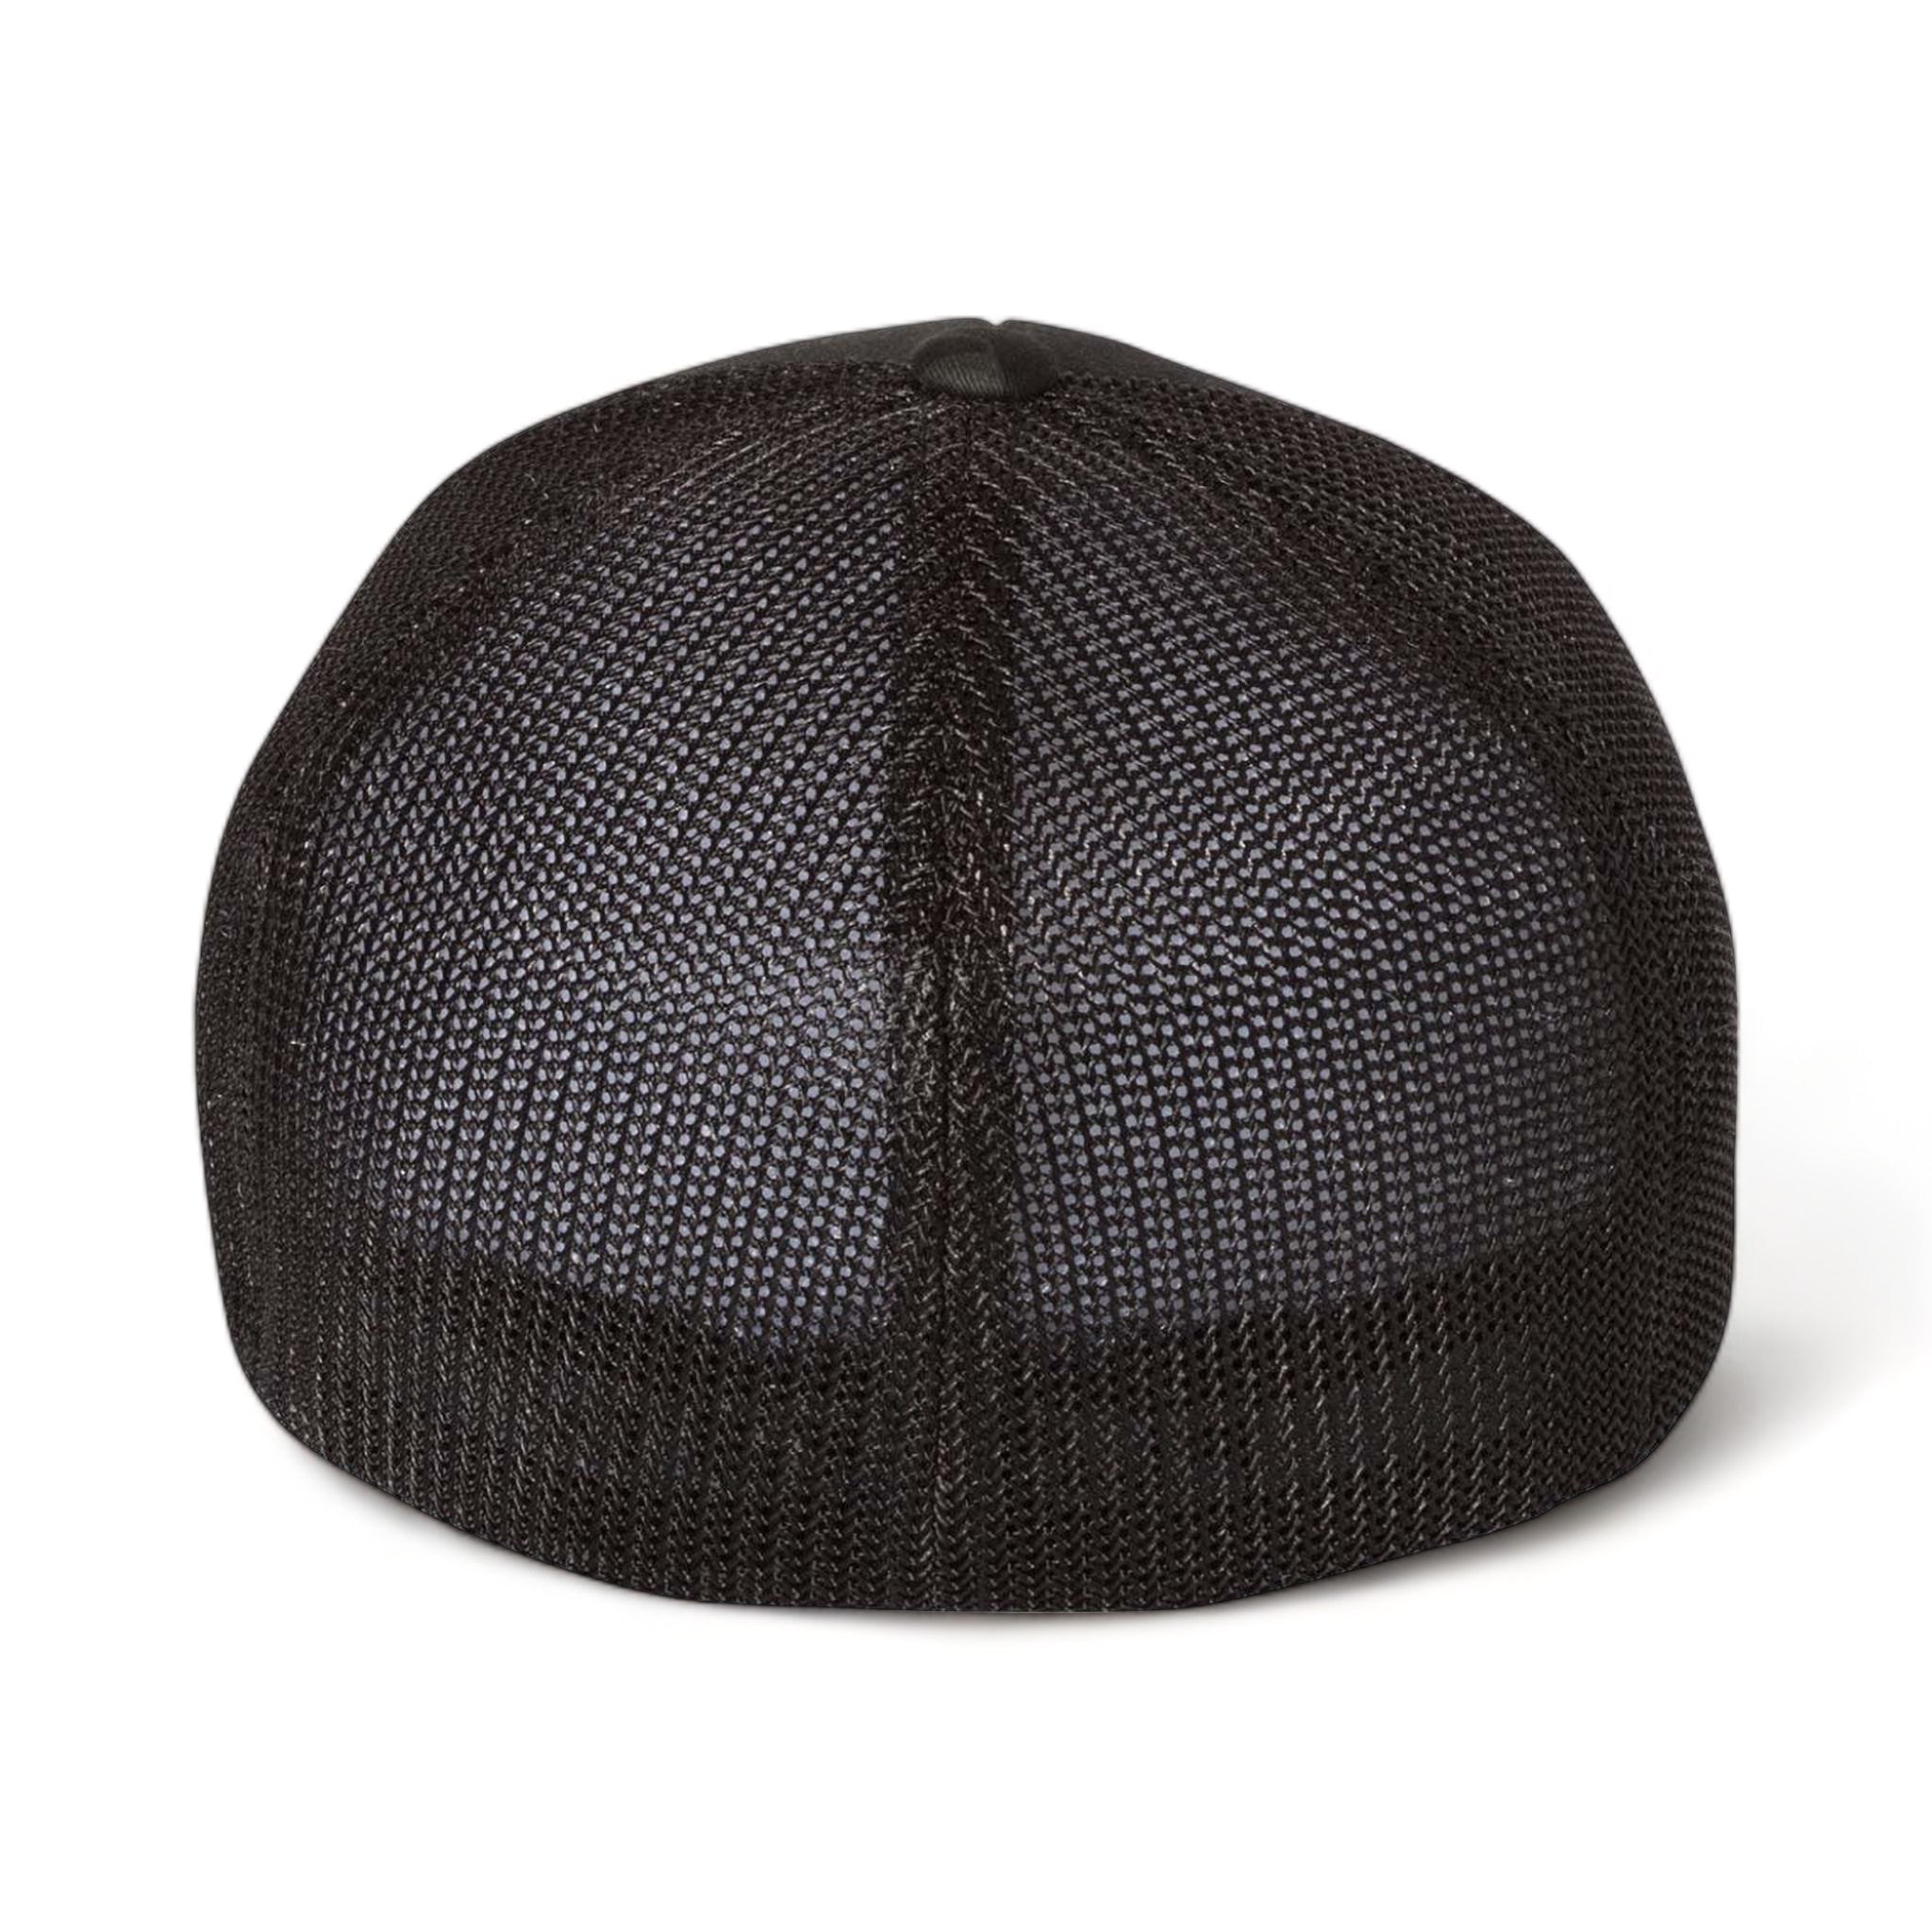 Back view of Flexfit 6511 custom hat in multicam black and black